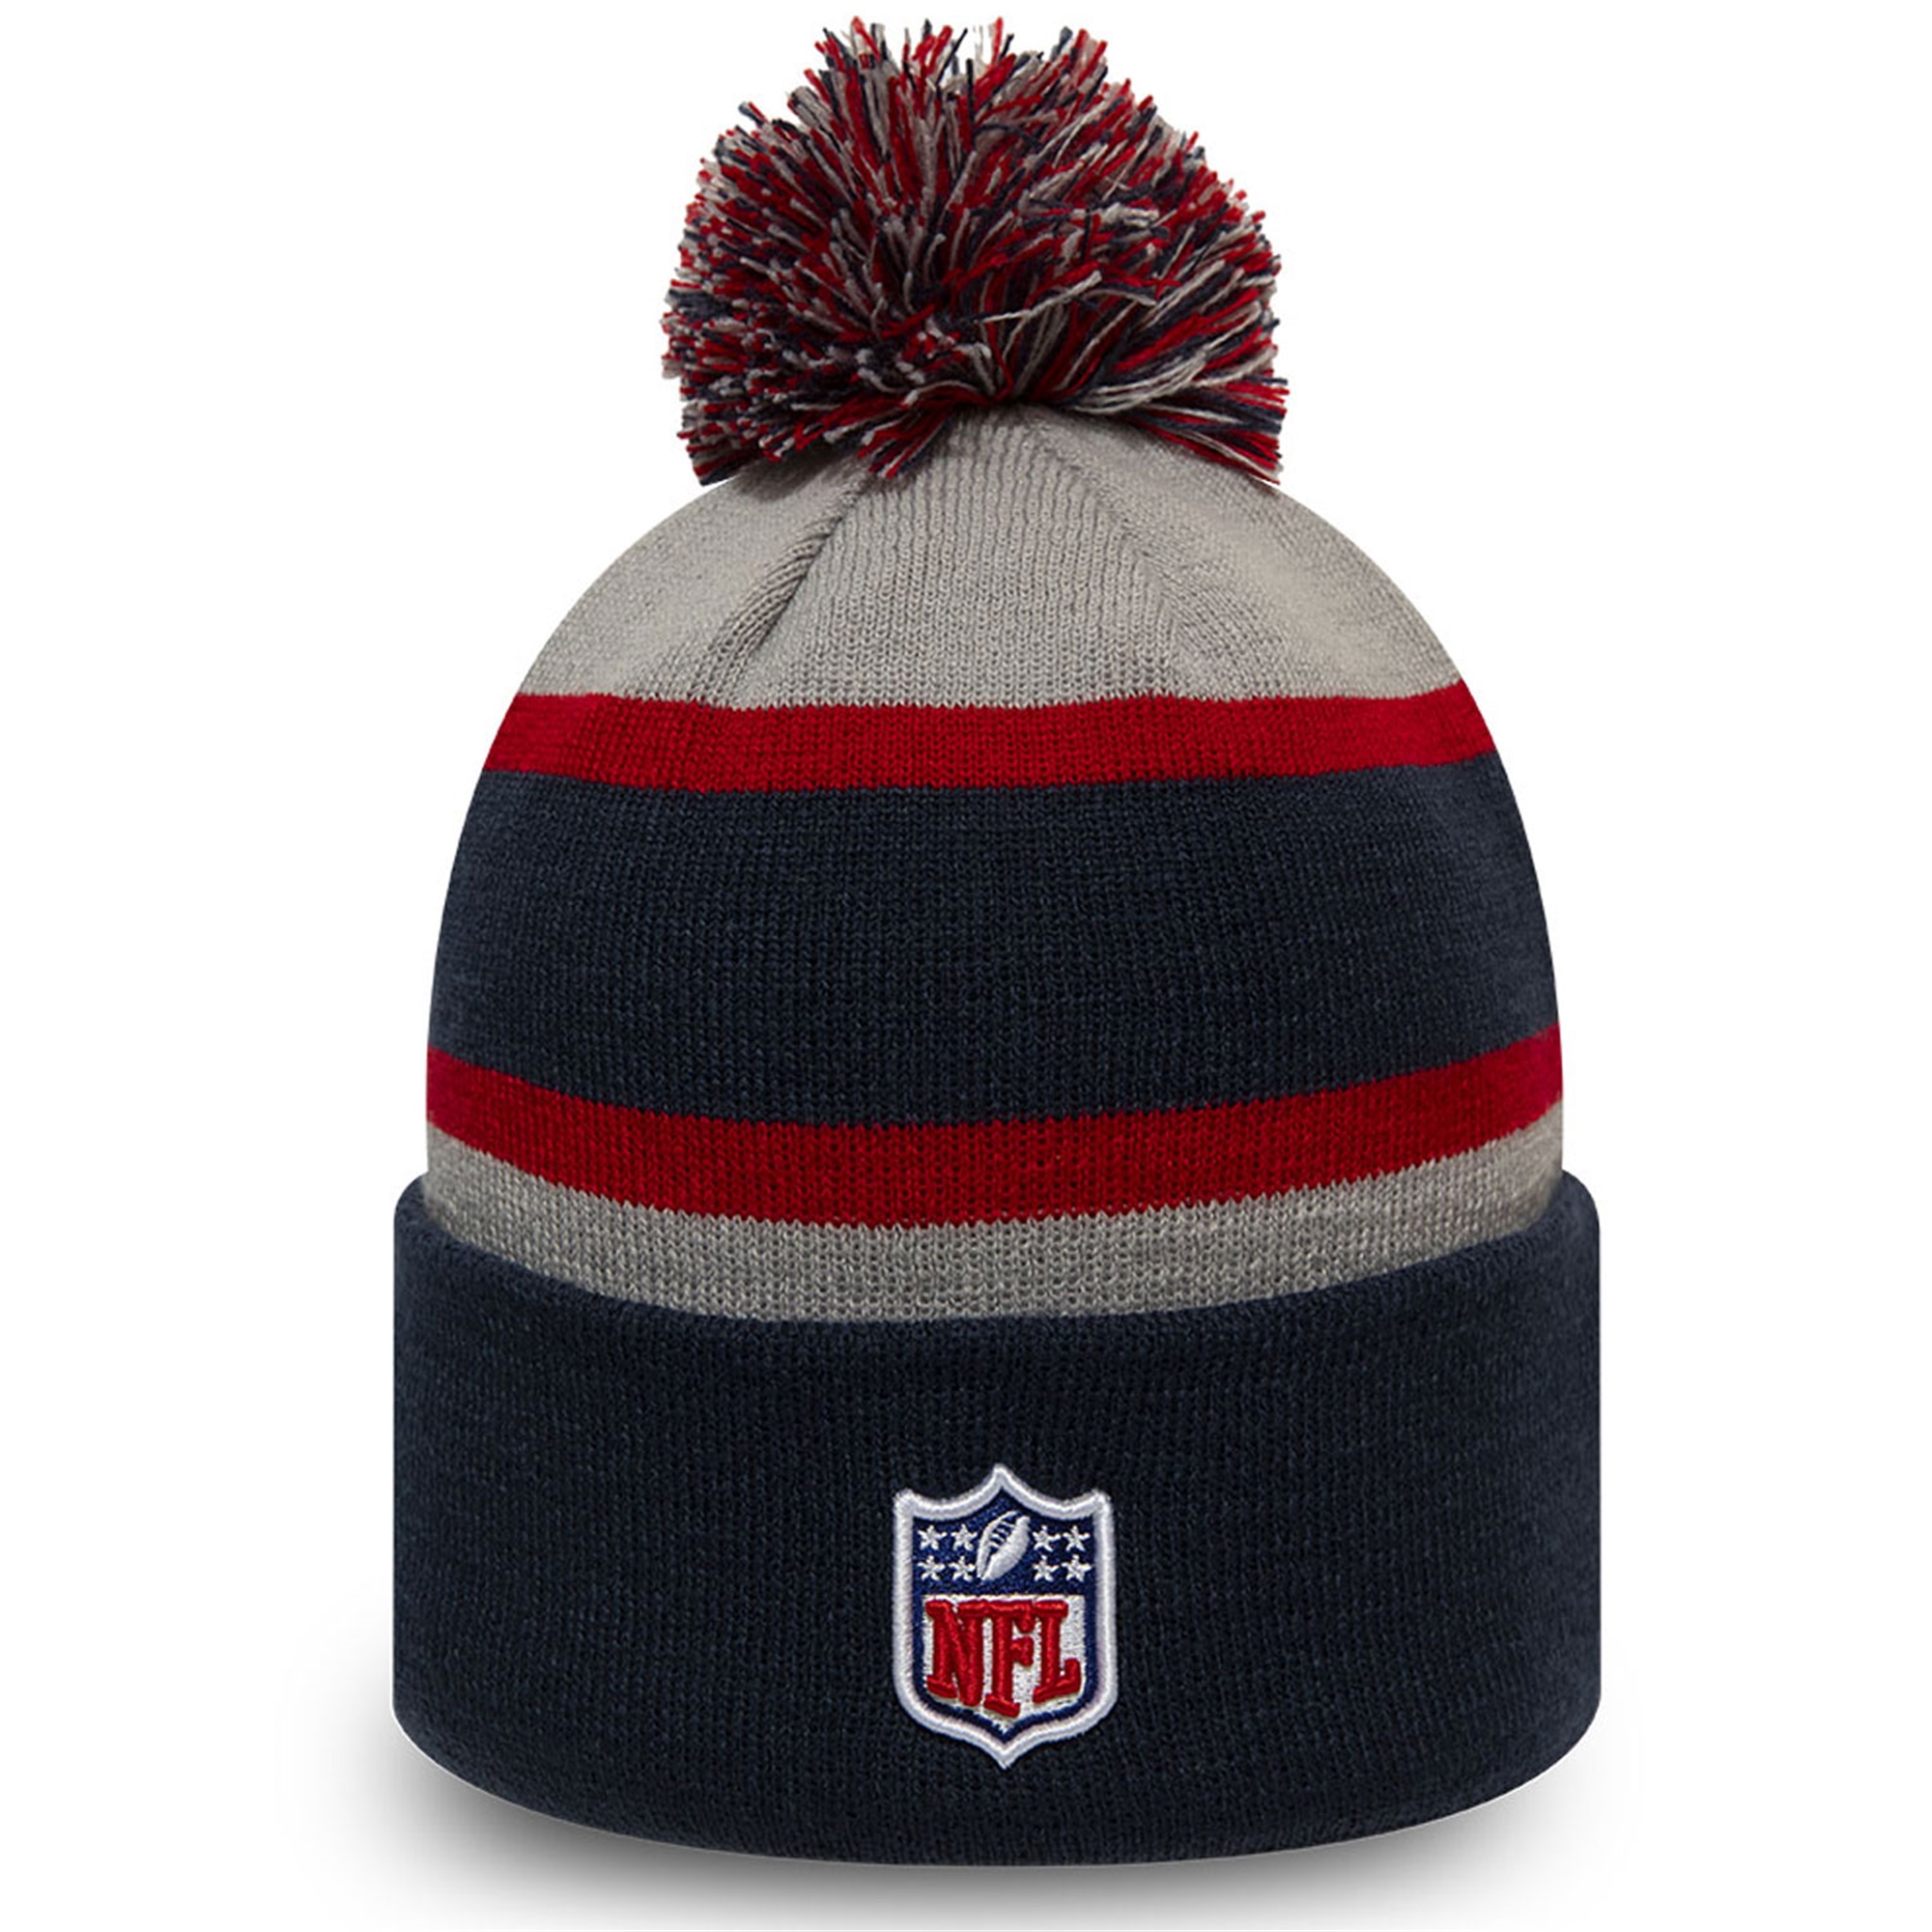 New Era NFL Beanie Winter Cap Patriots Raiders 49ers Pom Pom Hat eBay